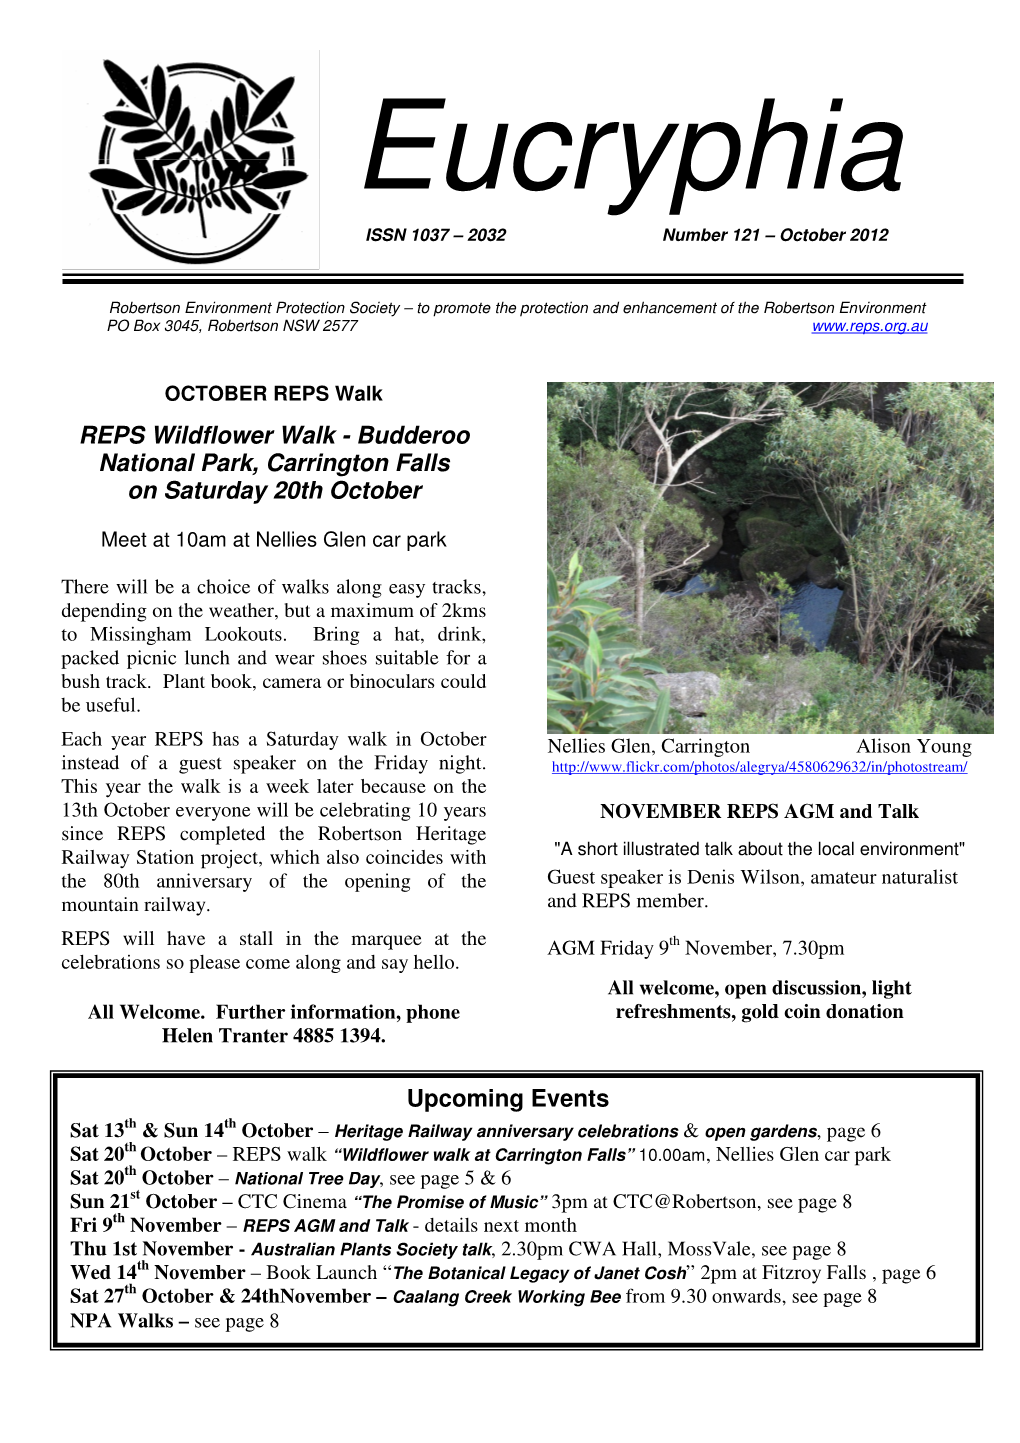 Budderoo National Park, Carrington Falls on Saturday 20Th October Upcoming Events